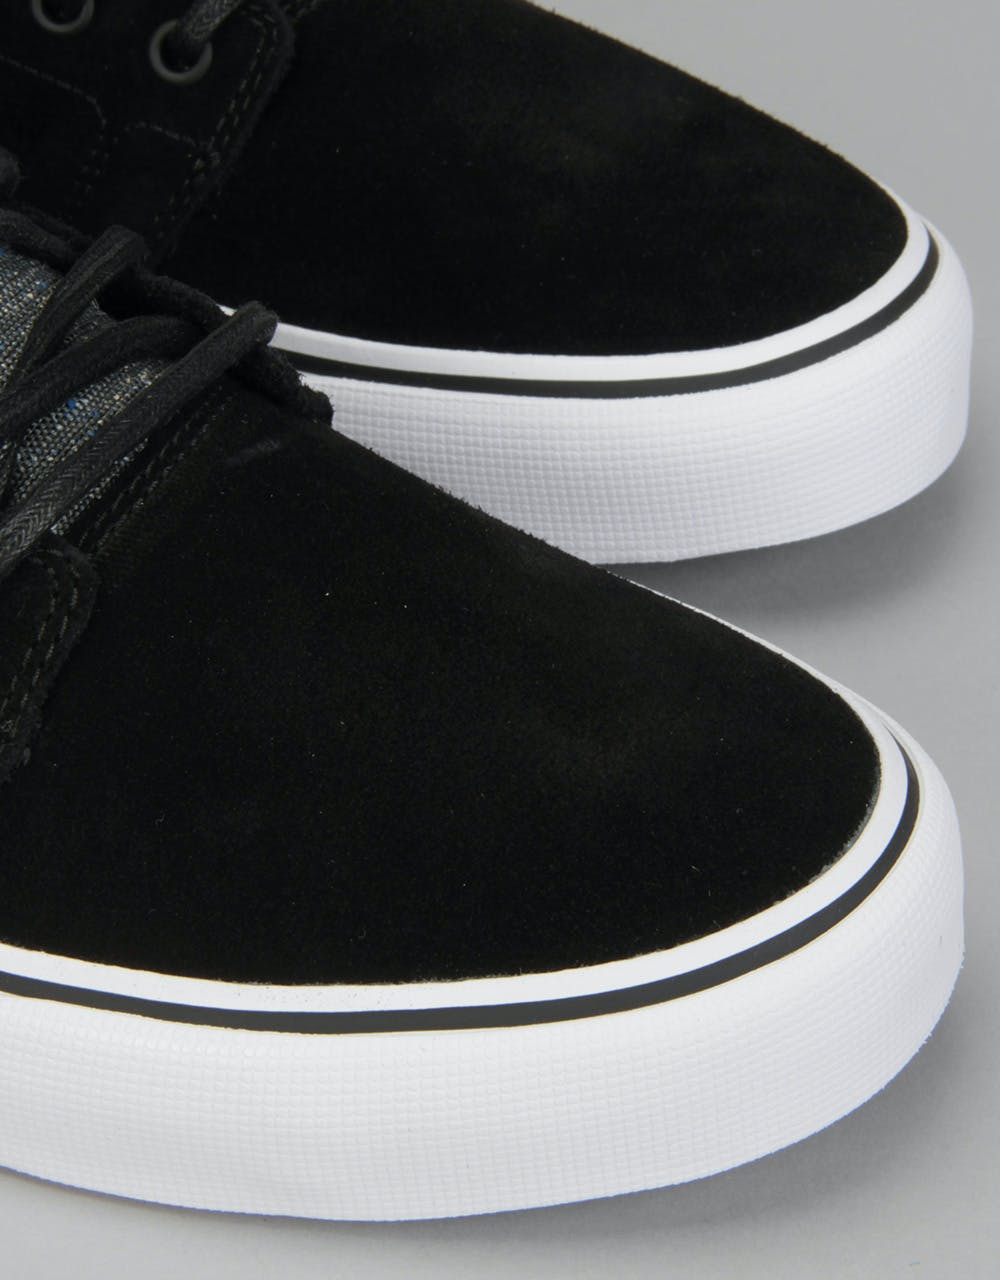 DC Trase LE Skate Shoes - Black/Armor/Black